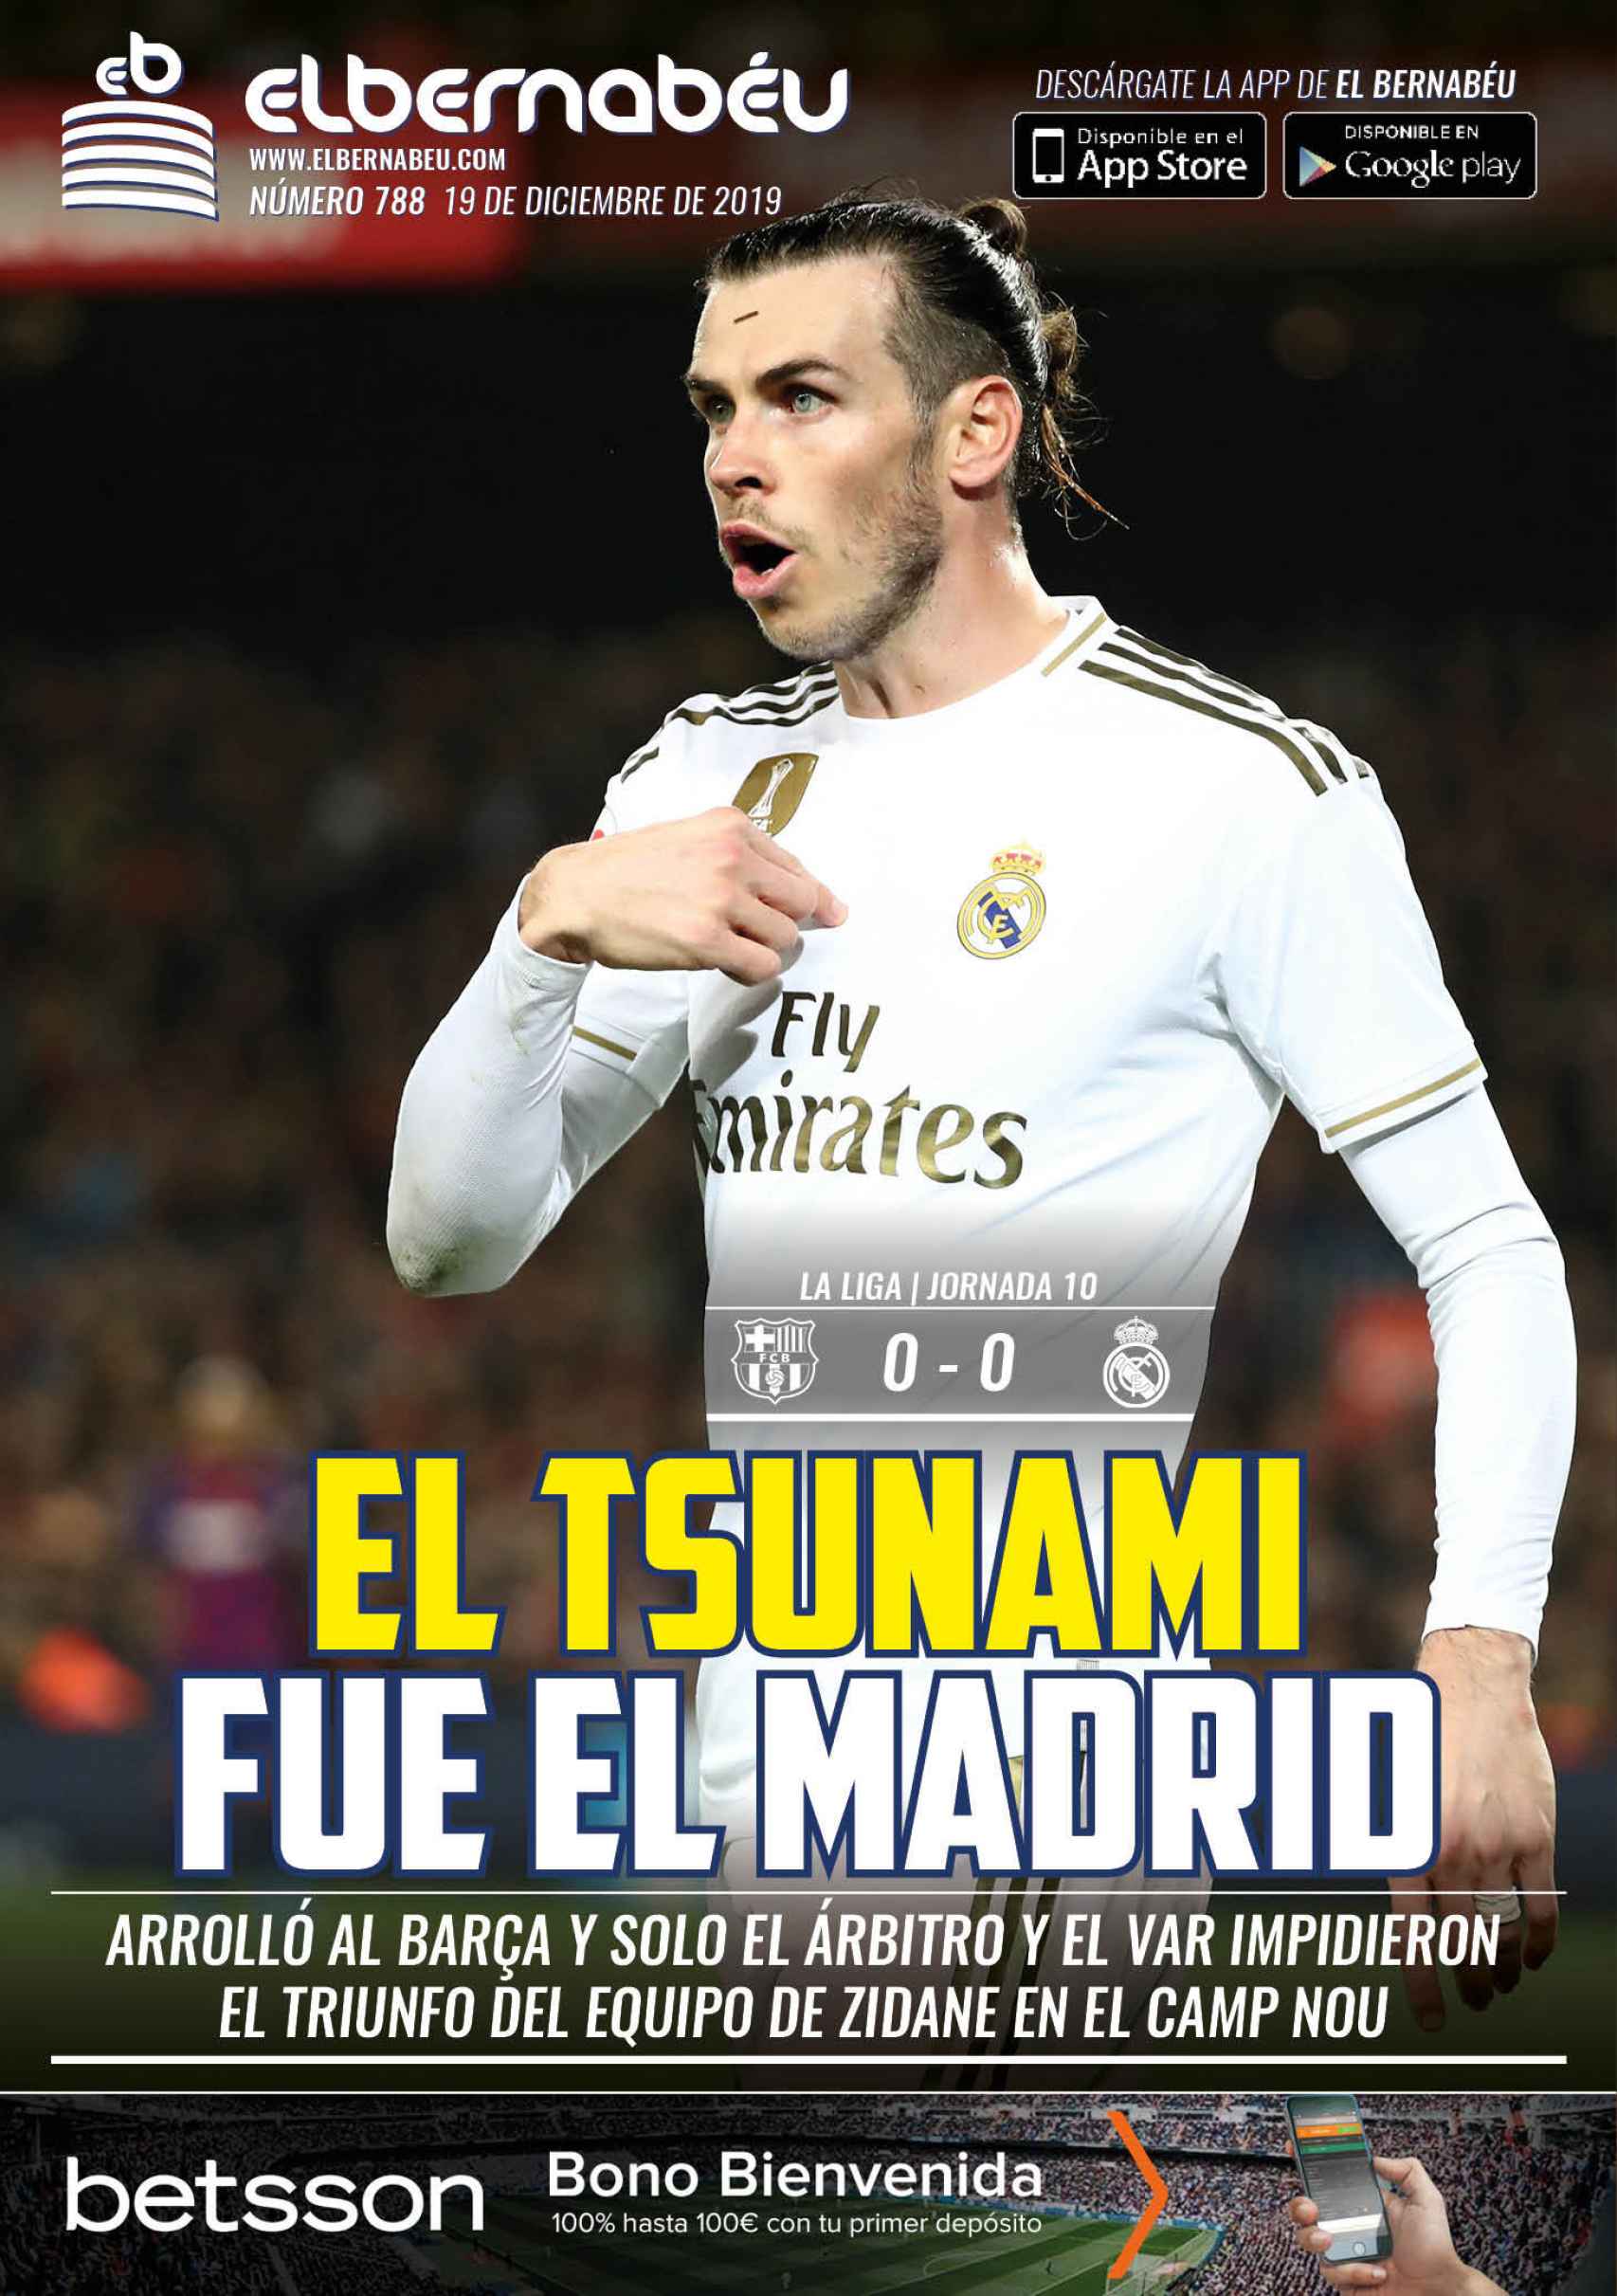 La portada de El Bernabéu (19/12/2019)